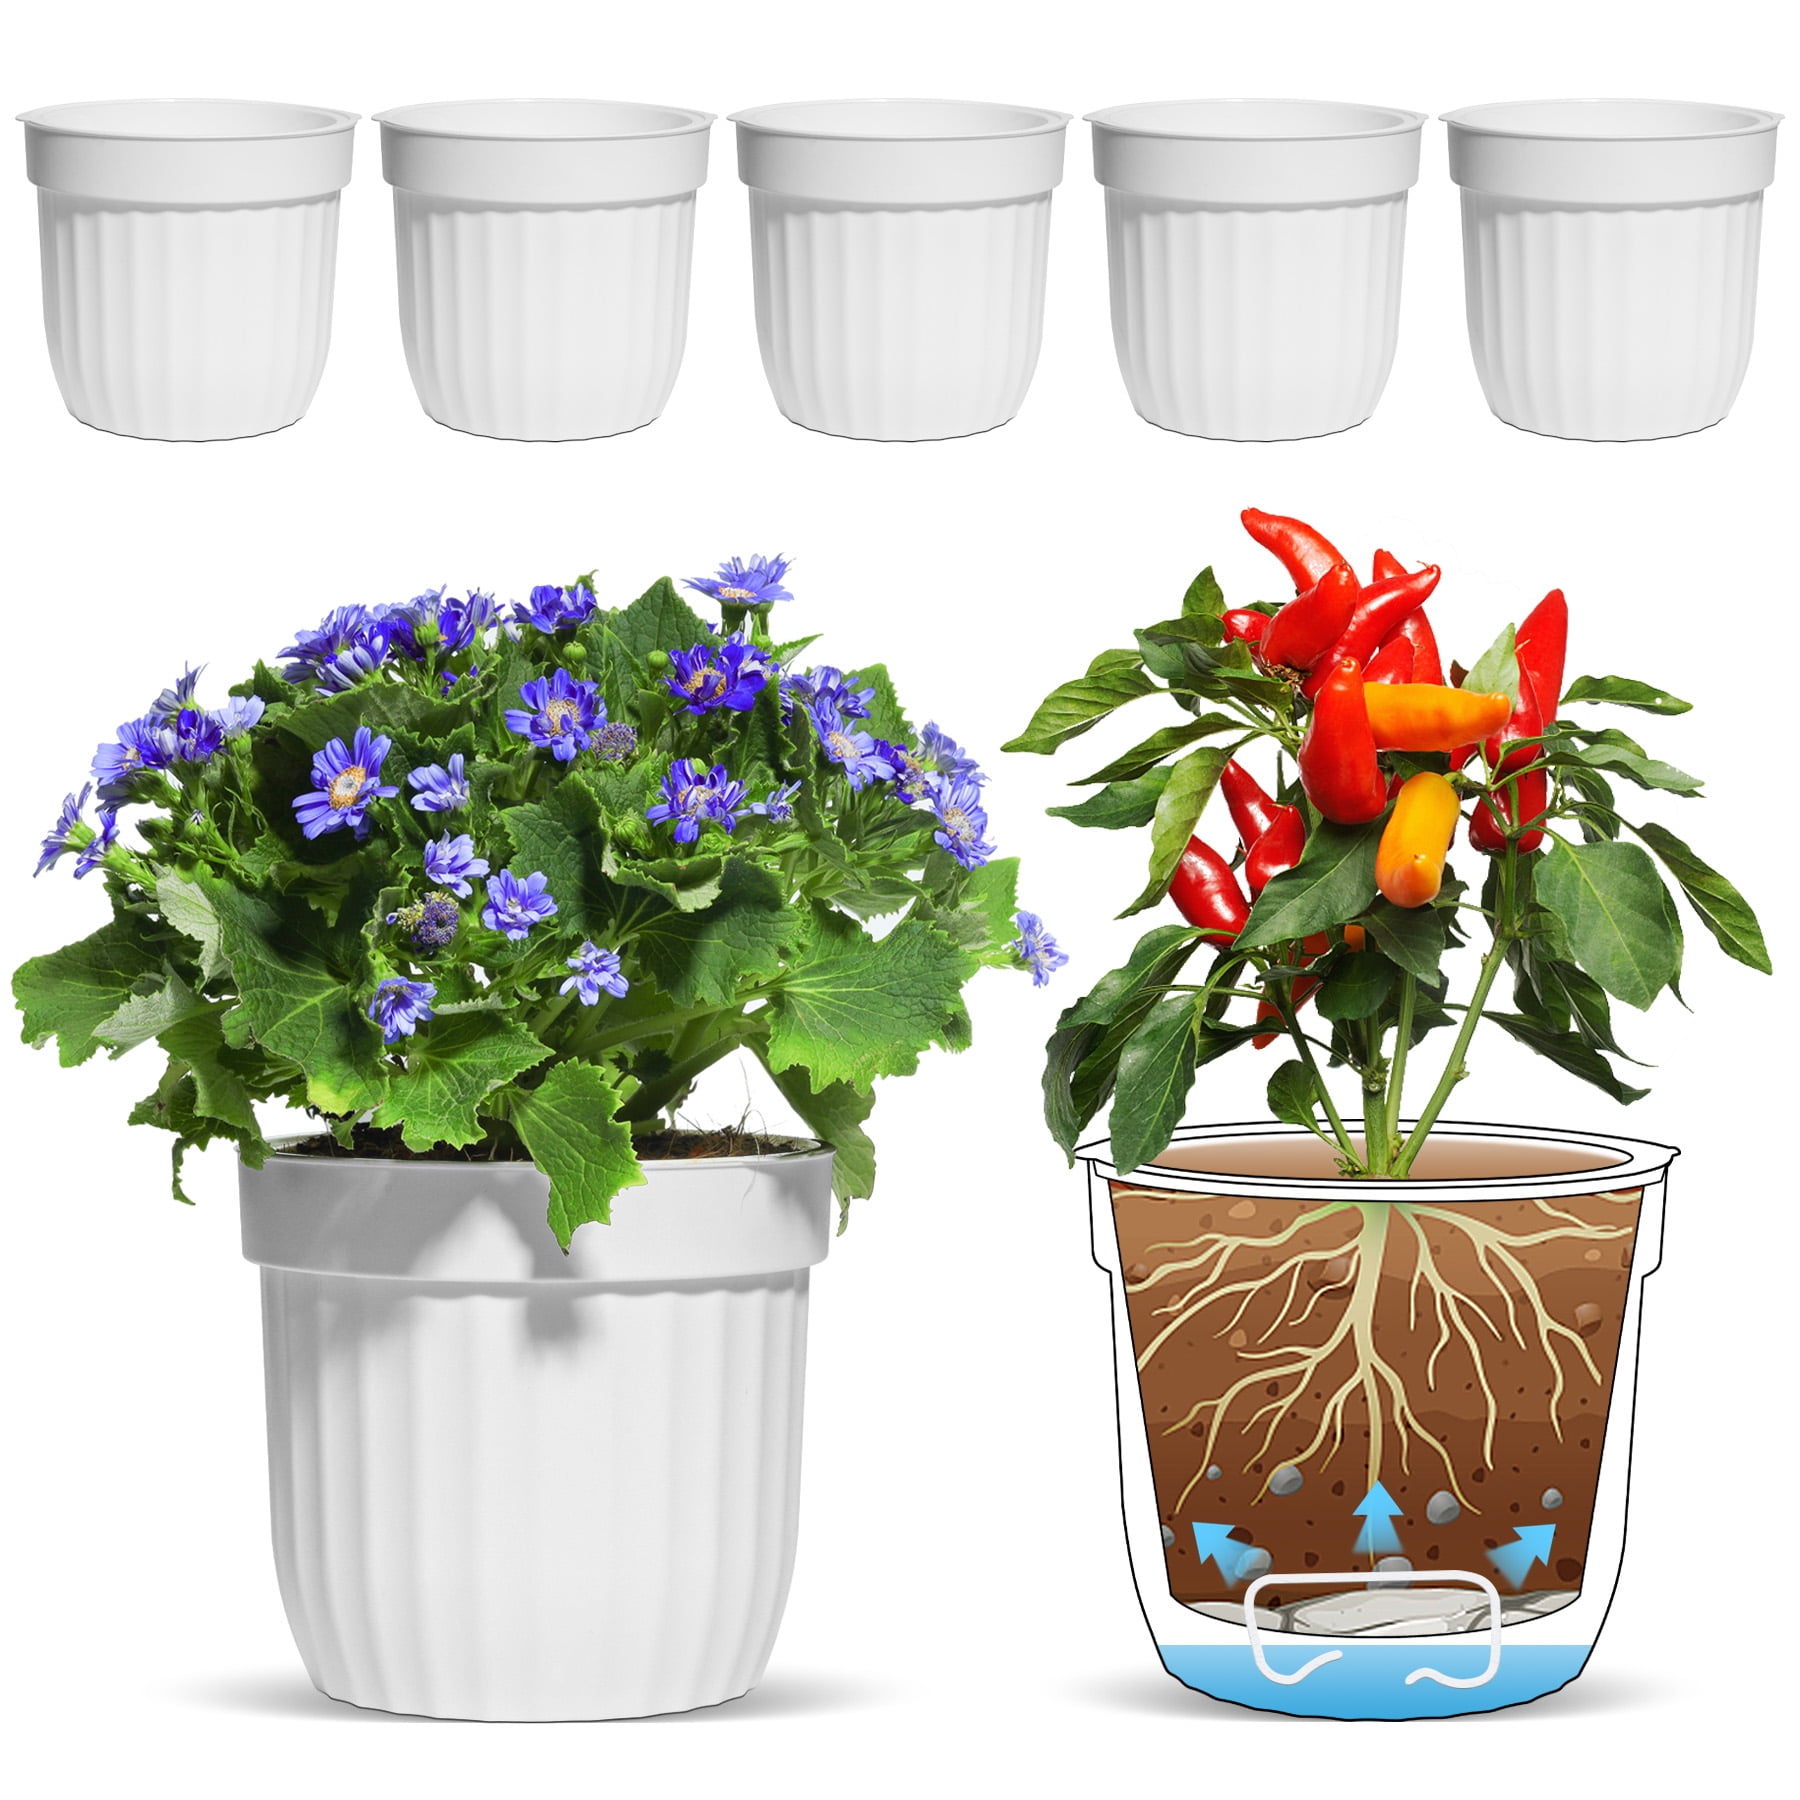 Details about   Plant Pot Self Watering Garden Planter Plastic Resin for Indoor Plants 